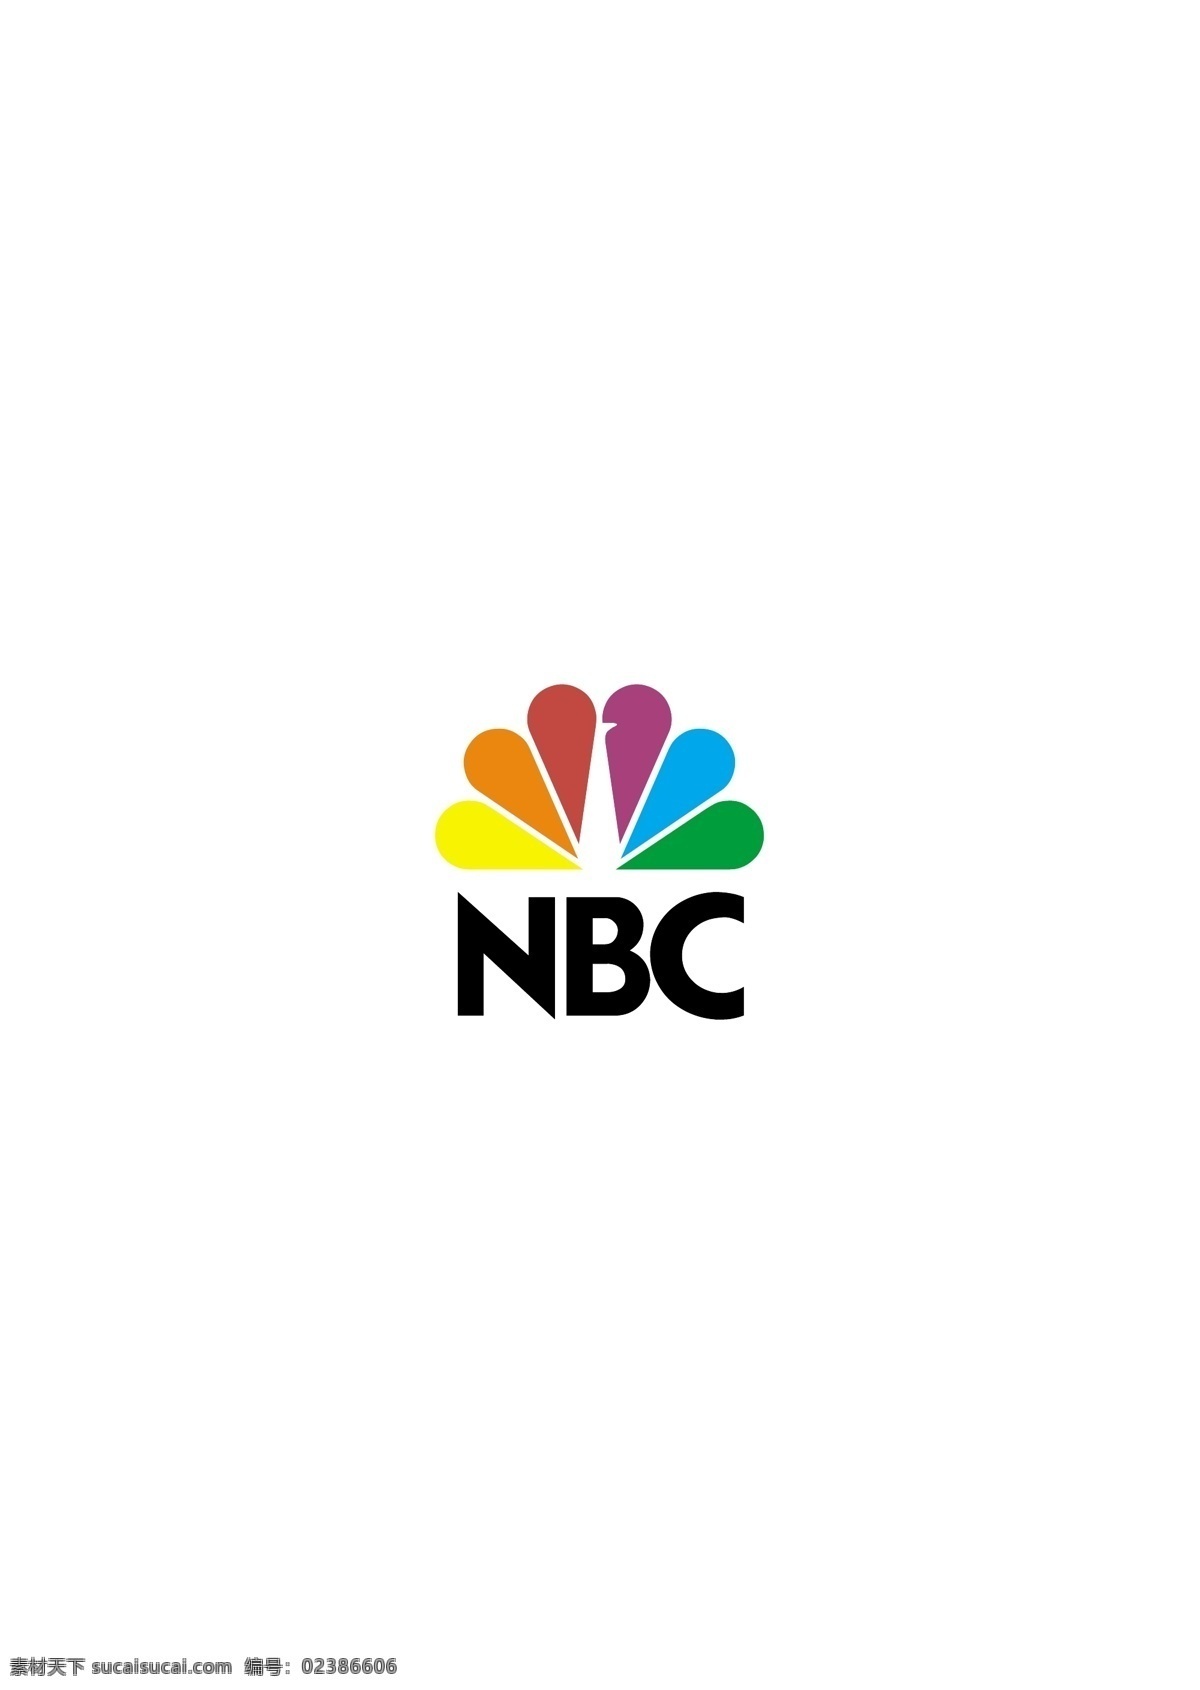 nbc1 logo大全 logo 设计欣赏 商业矢量 矢量下载 传媒 标志 标志设计 欣赏 网页矢量 矢量图 其他矢量图